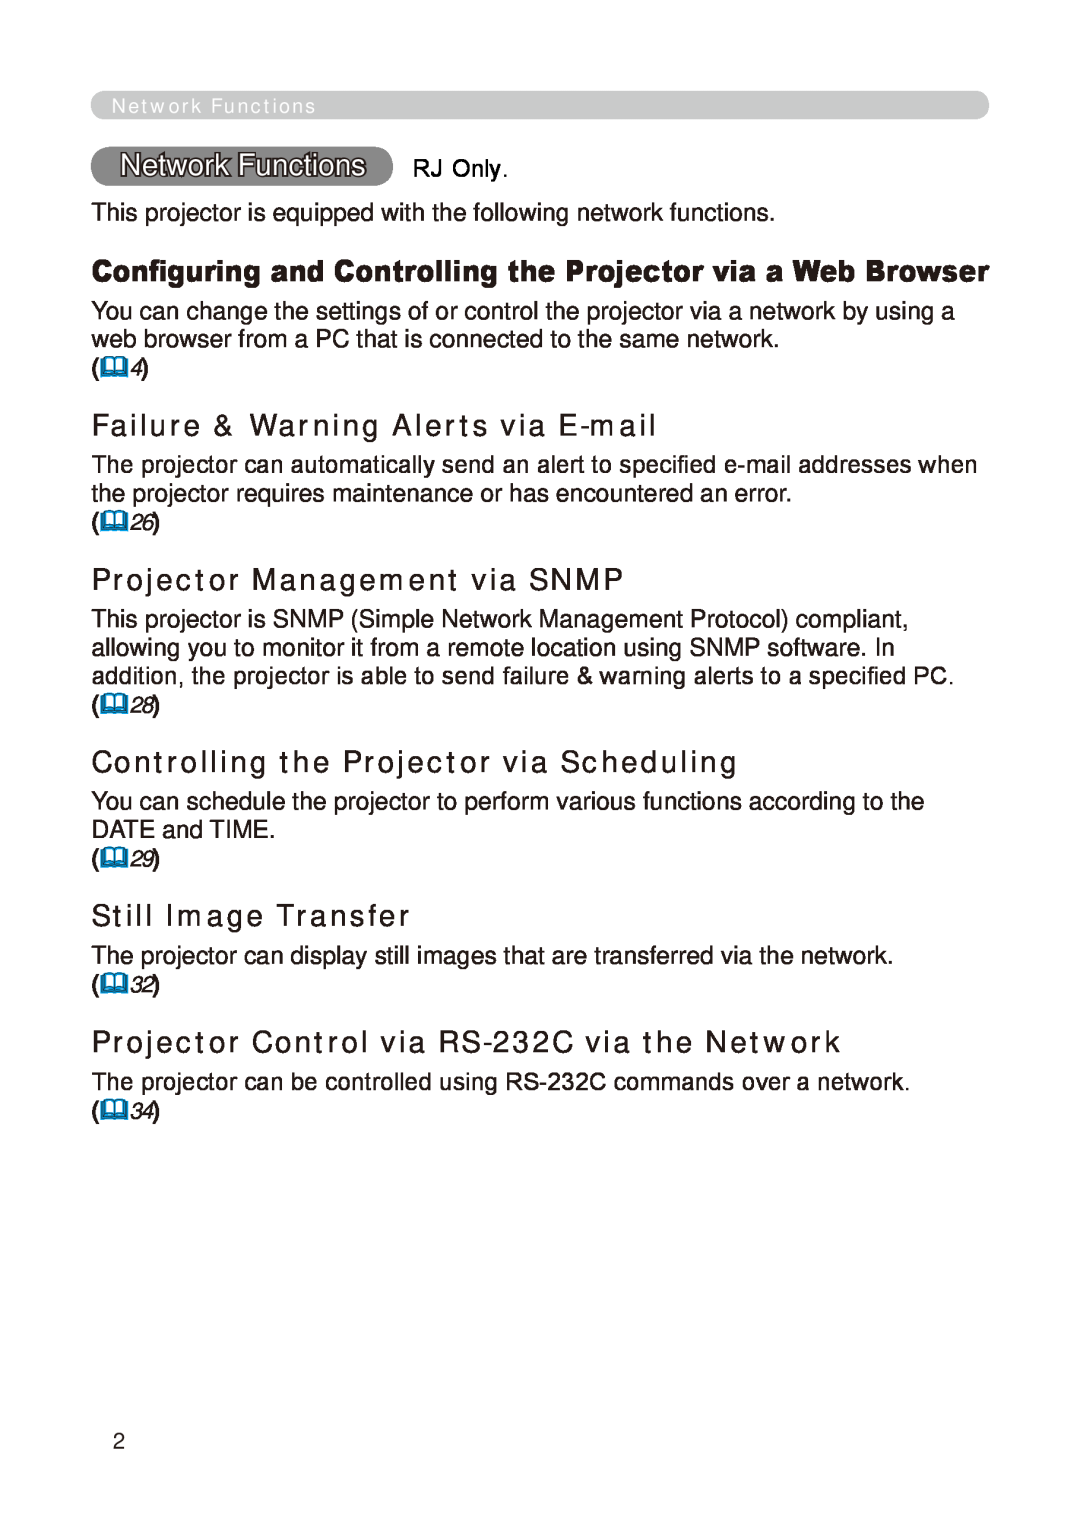 Dukane 8776-RJ, 8755E-RJ Configuring and Controlling the Projector via a Web Browser, Failure & Warning Alerts via E-mail 